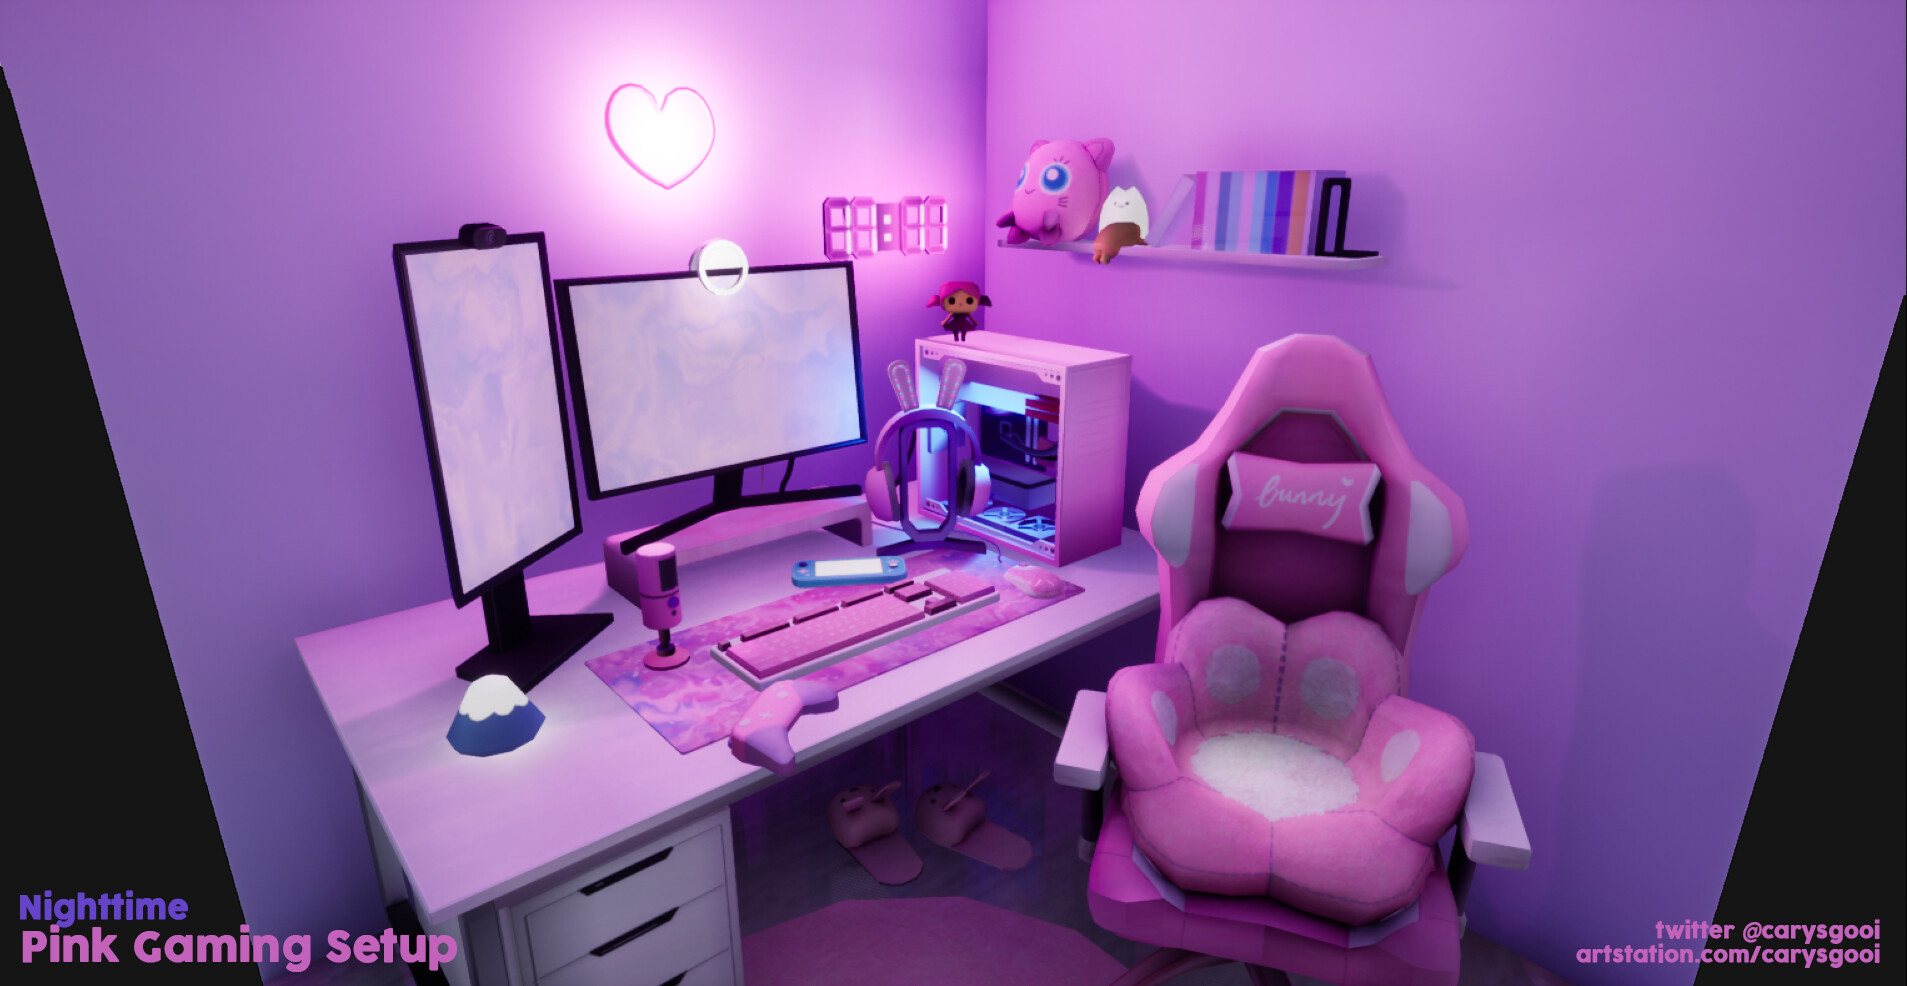 ArtStation - Pink Gaming Setup